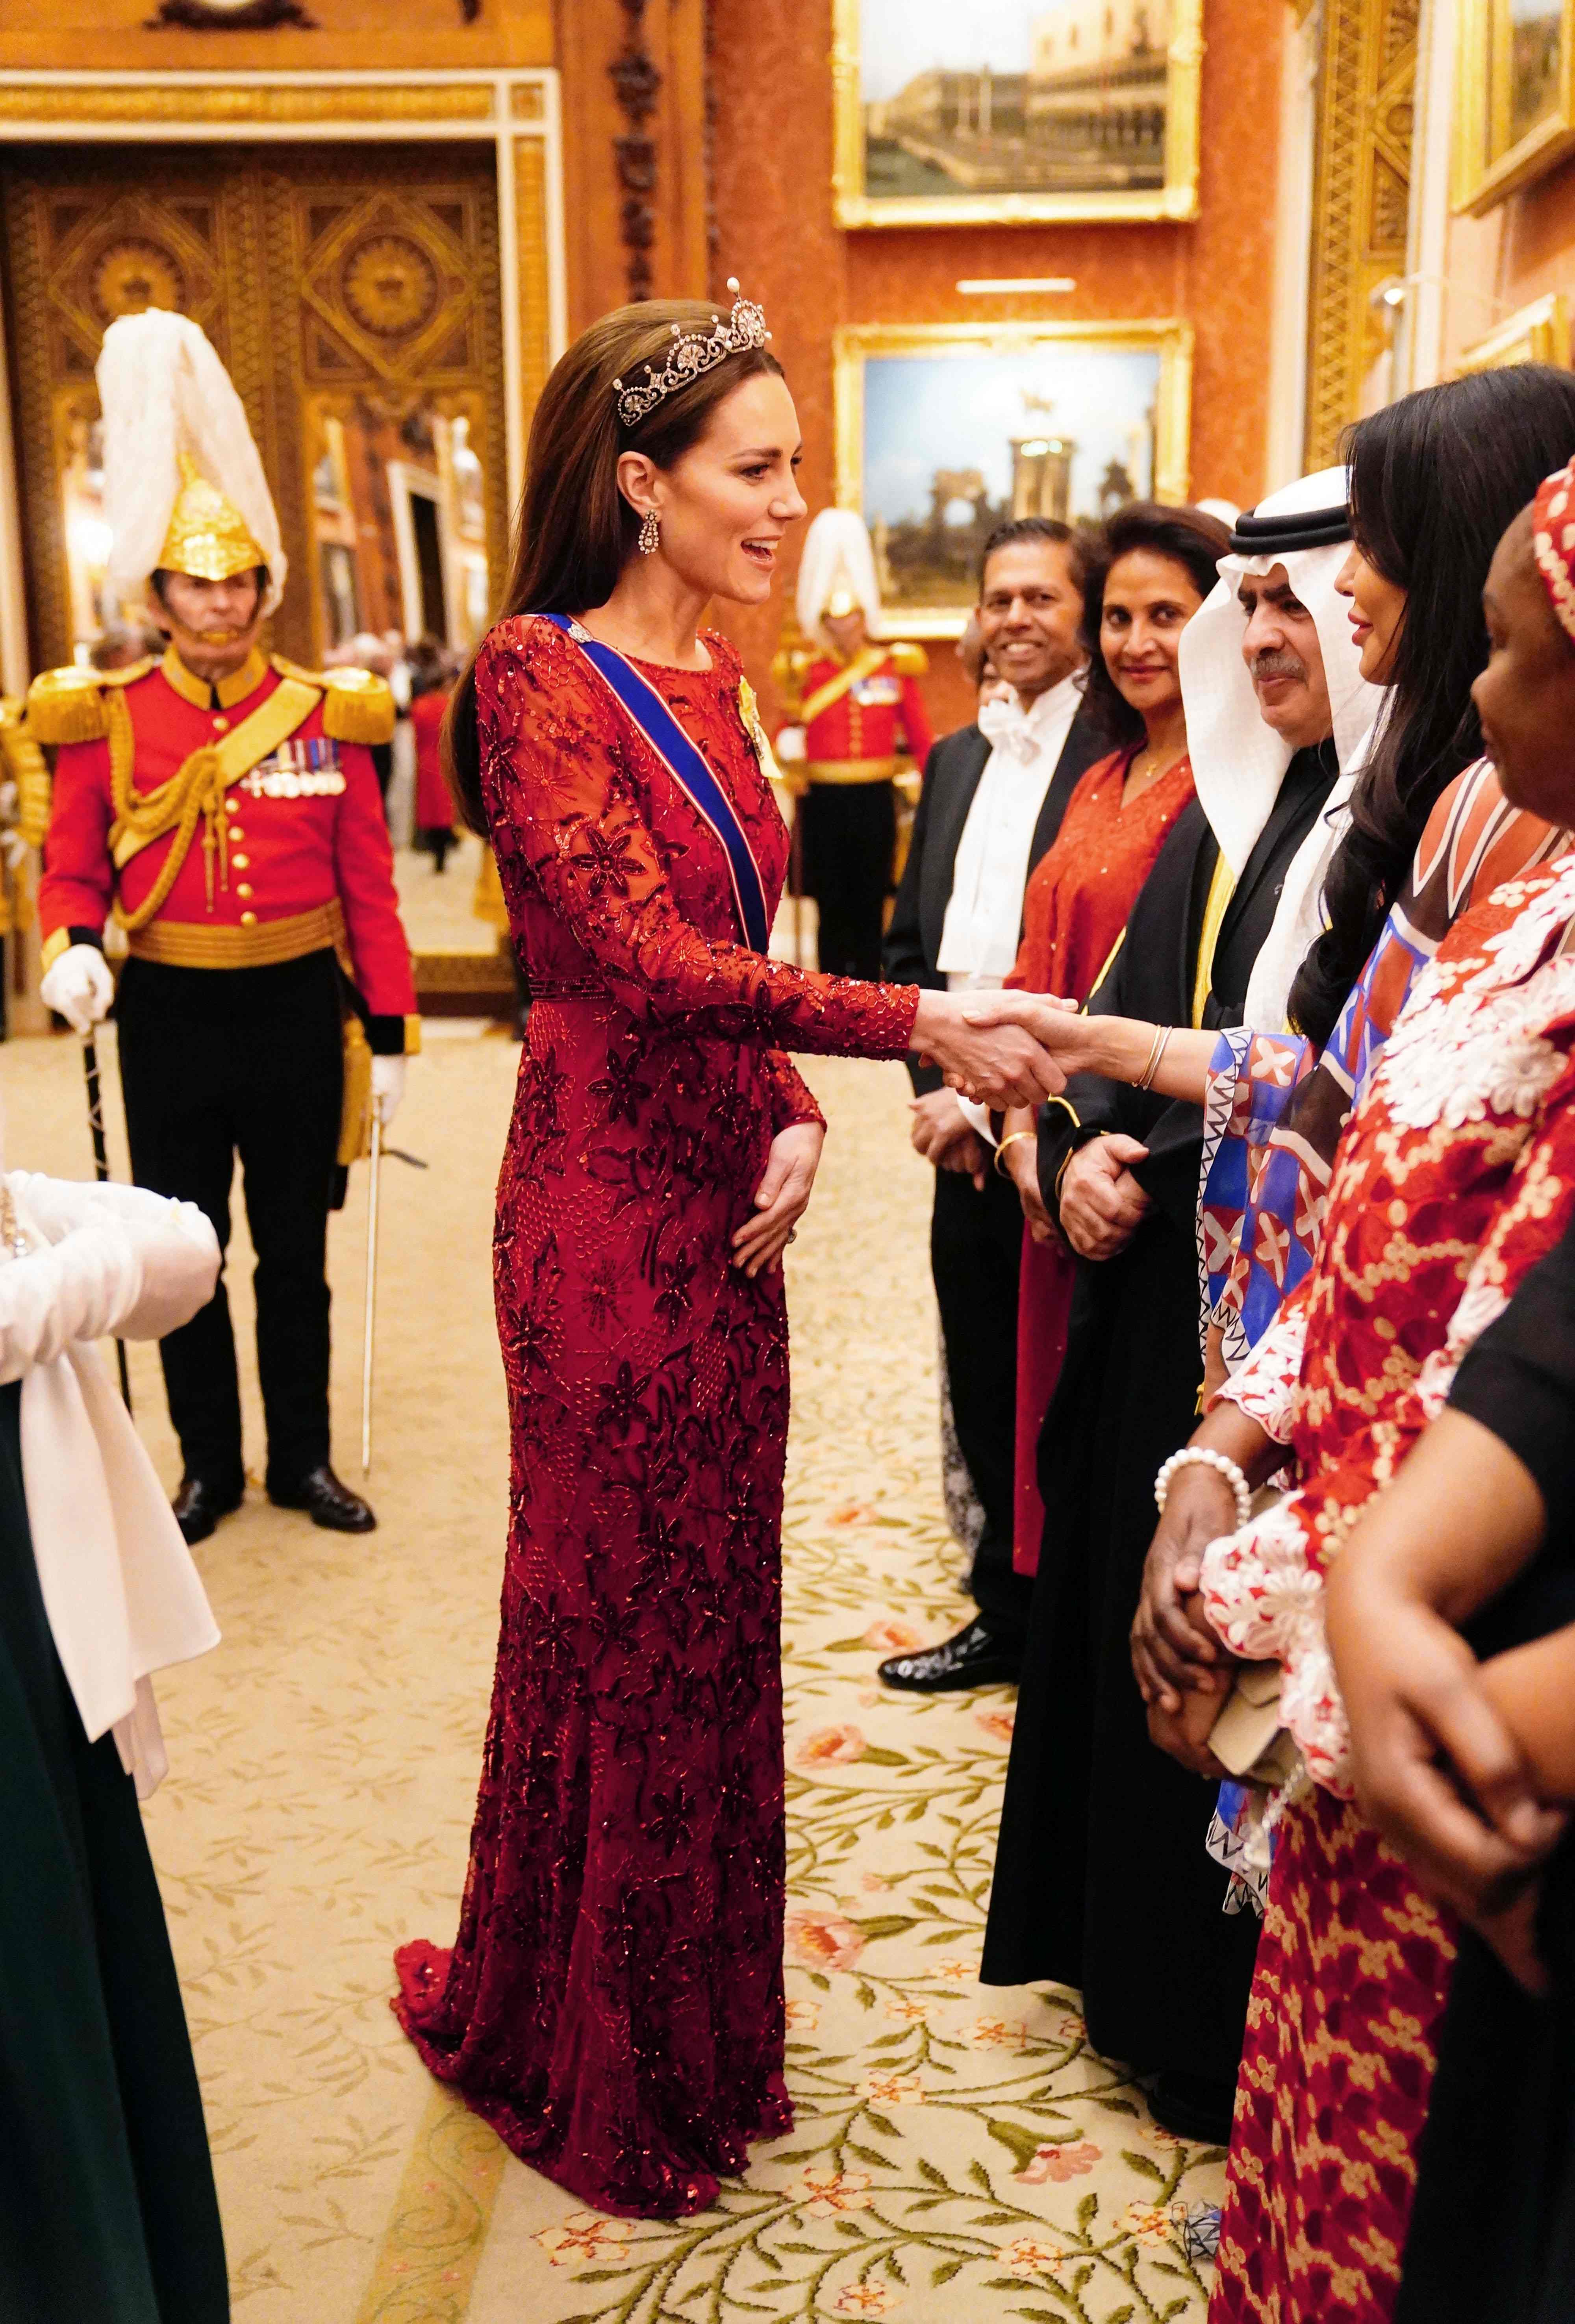 Kate, Princess of Wales, greets guests during a Diplomatic Corps reception at Buckingham Palace